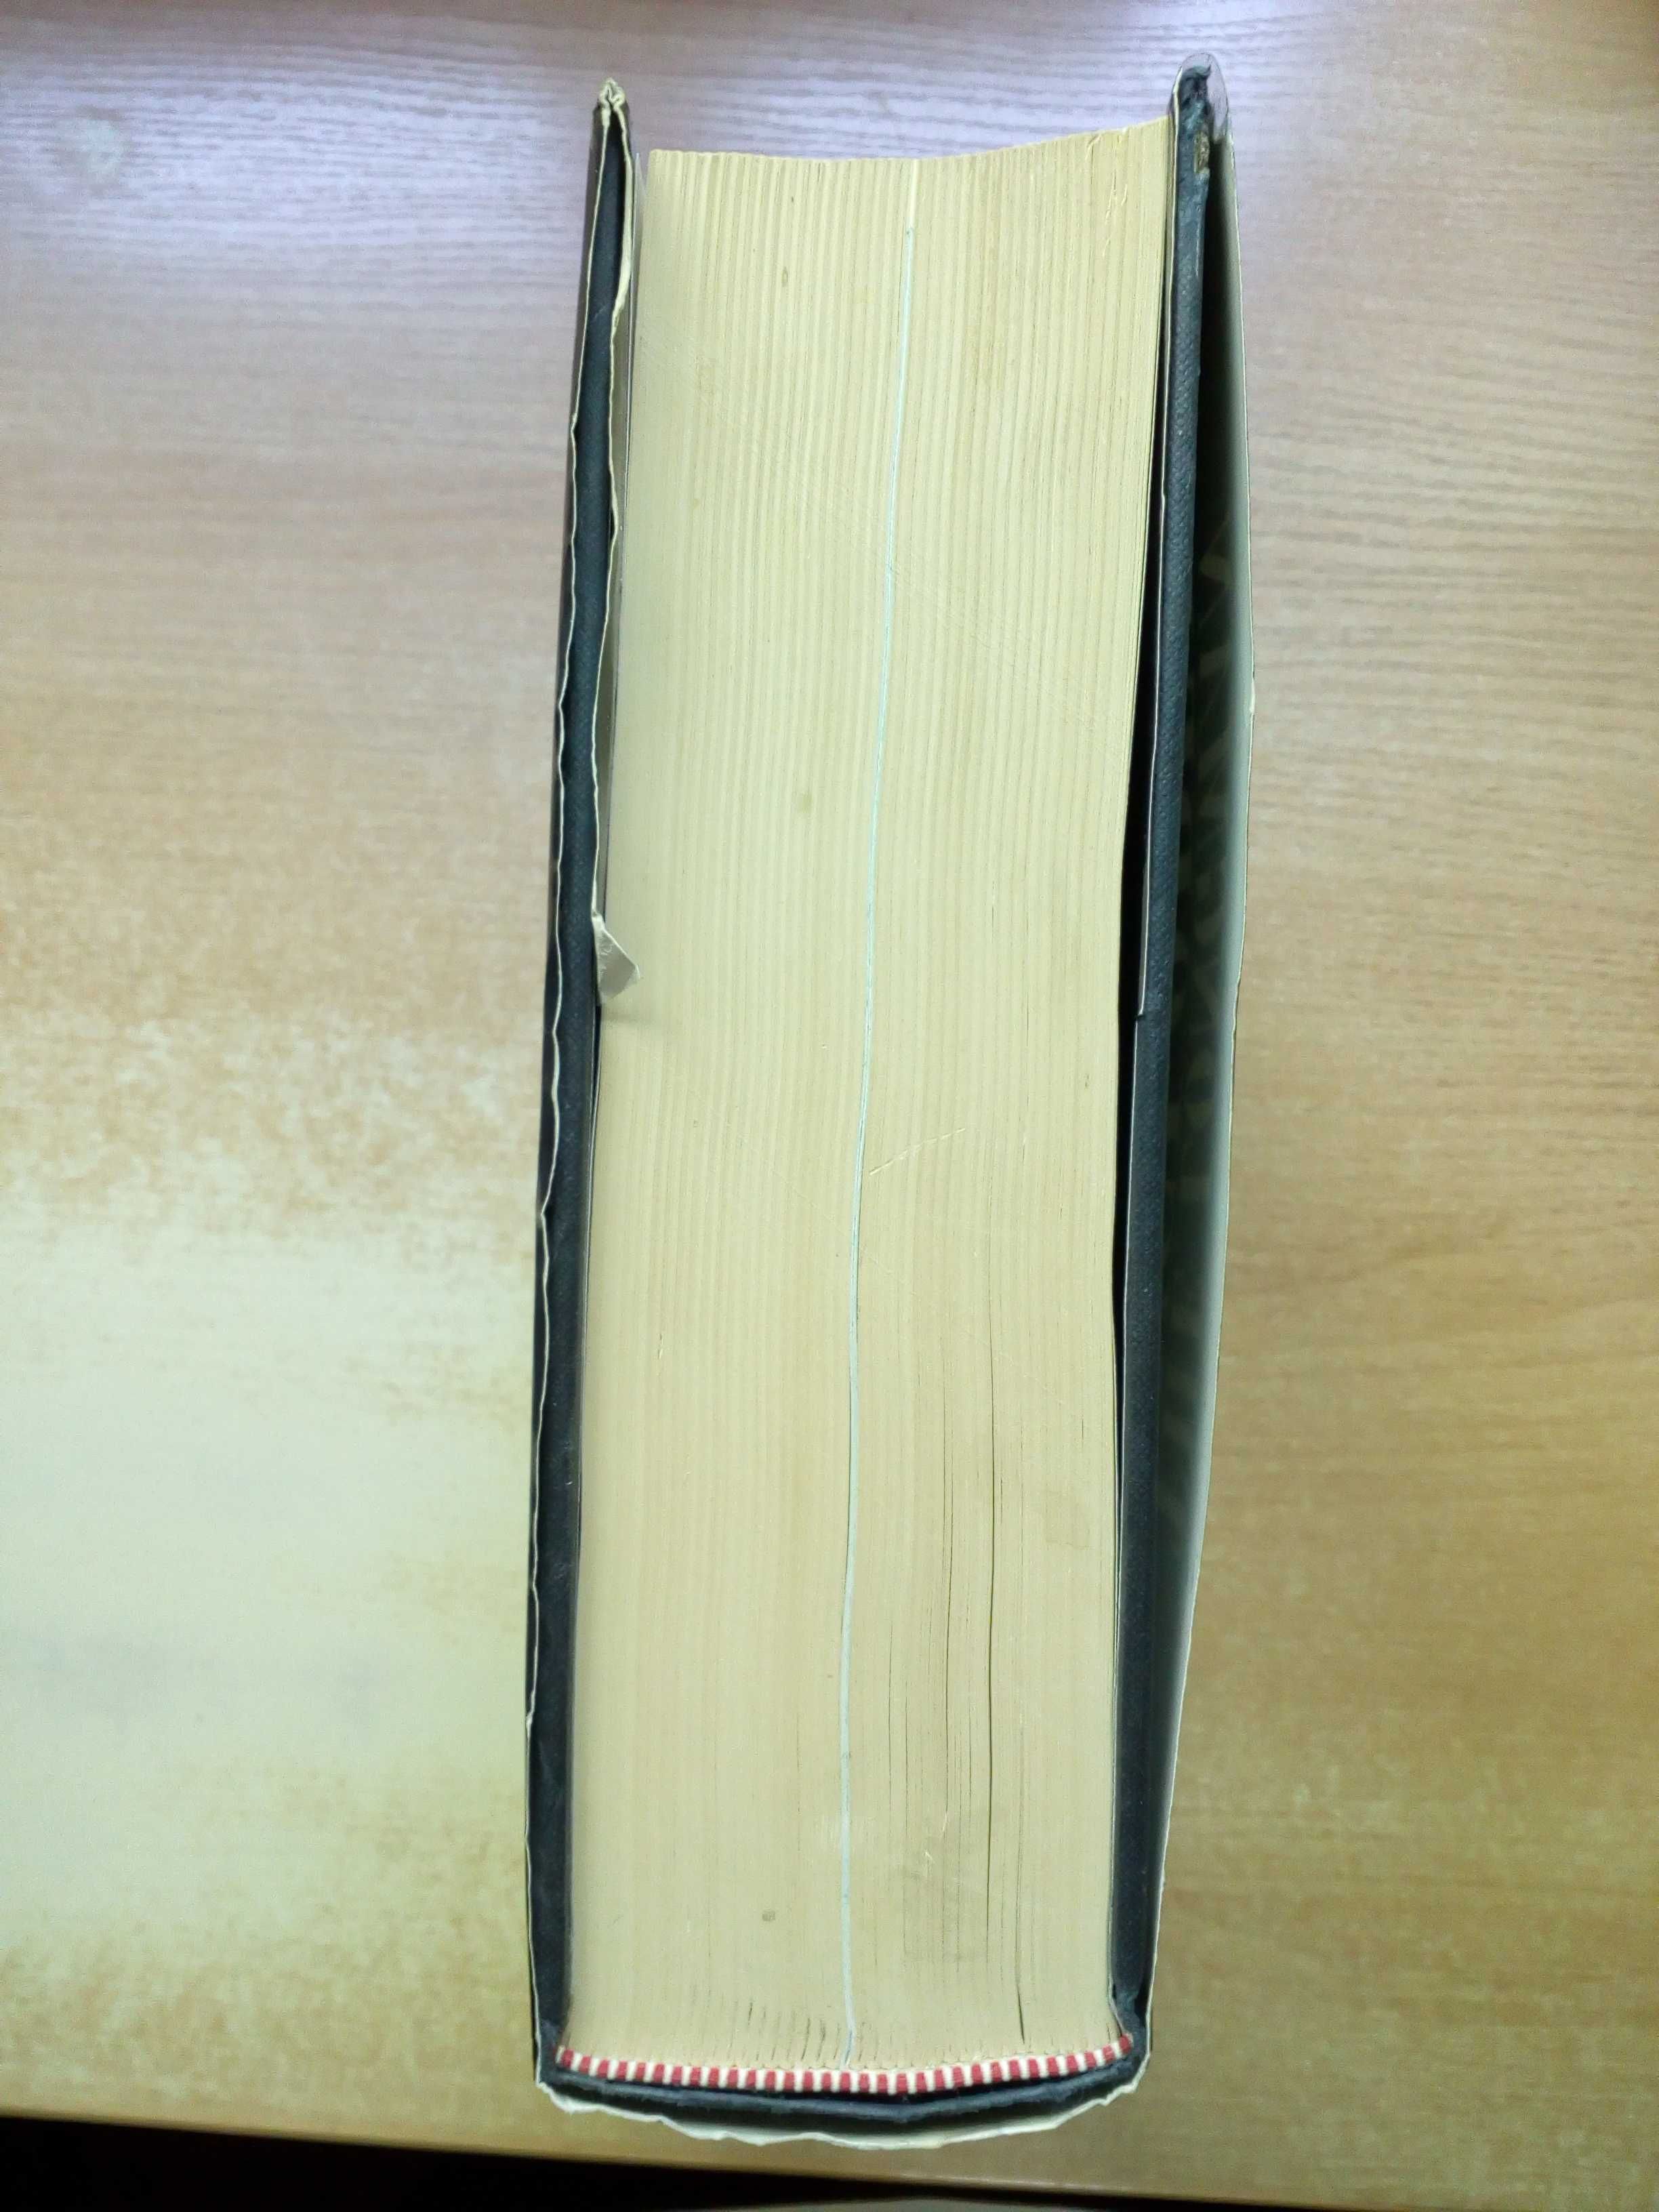 The longman encyclopedia.First edition.